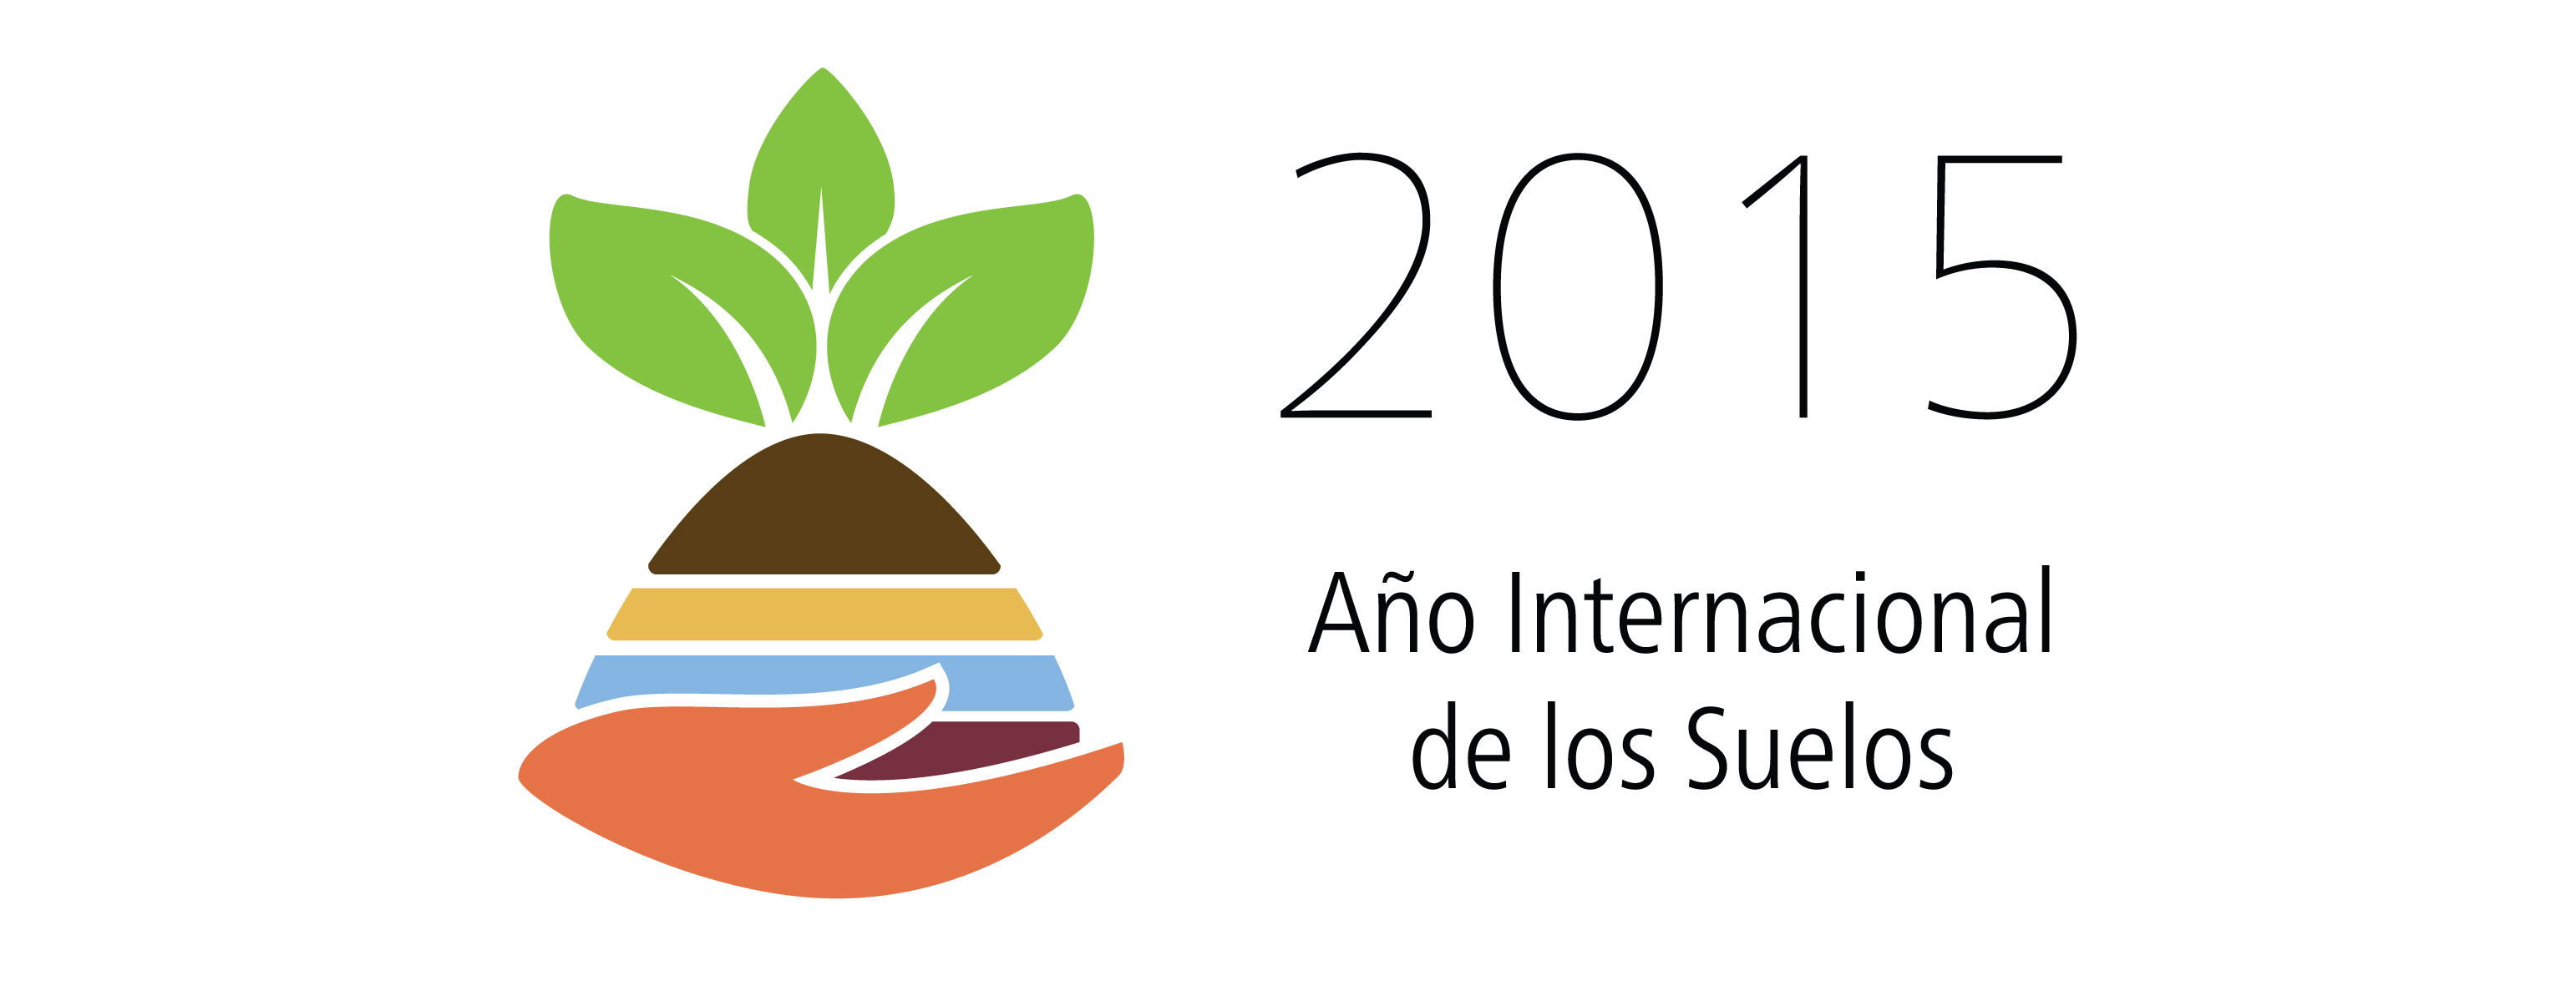 Descargar el logo del AIS 2015 | 2015 International Year of Soils